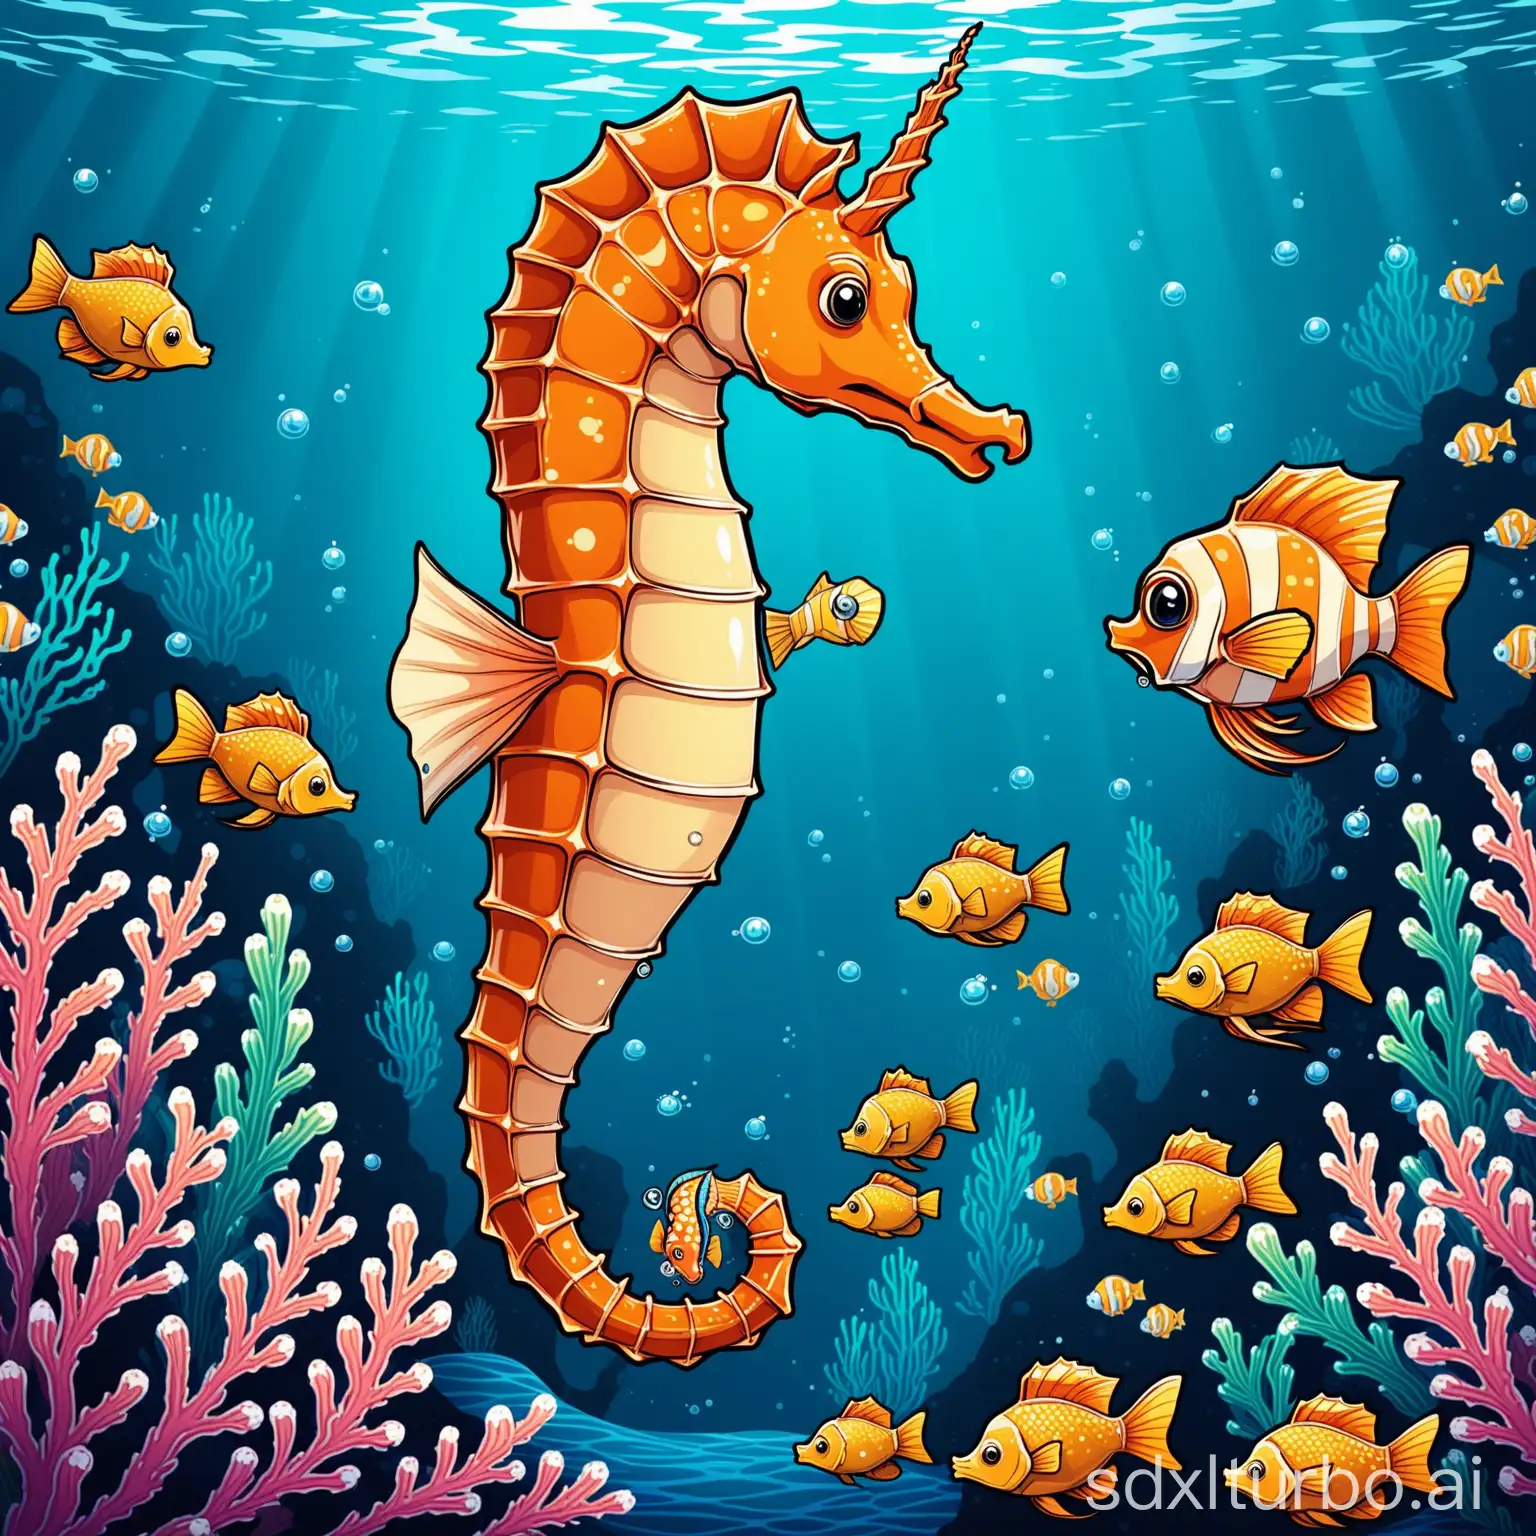 Cartoon-Seahorse-and-Fish-Encounter-in-the-Deep-Sea